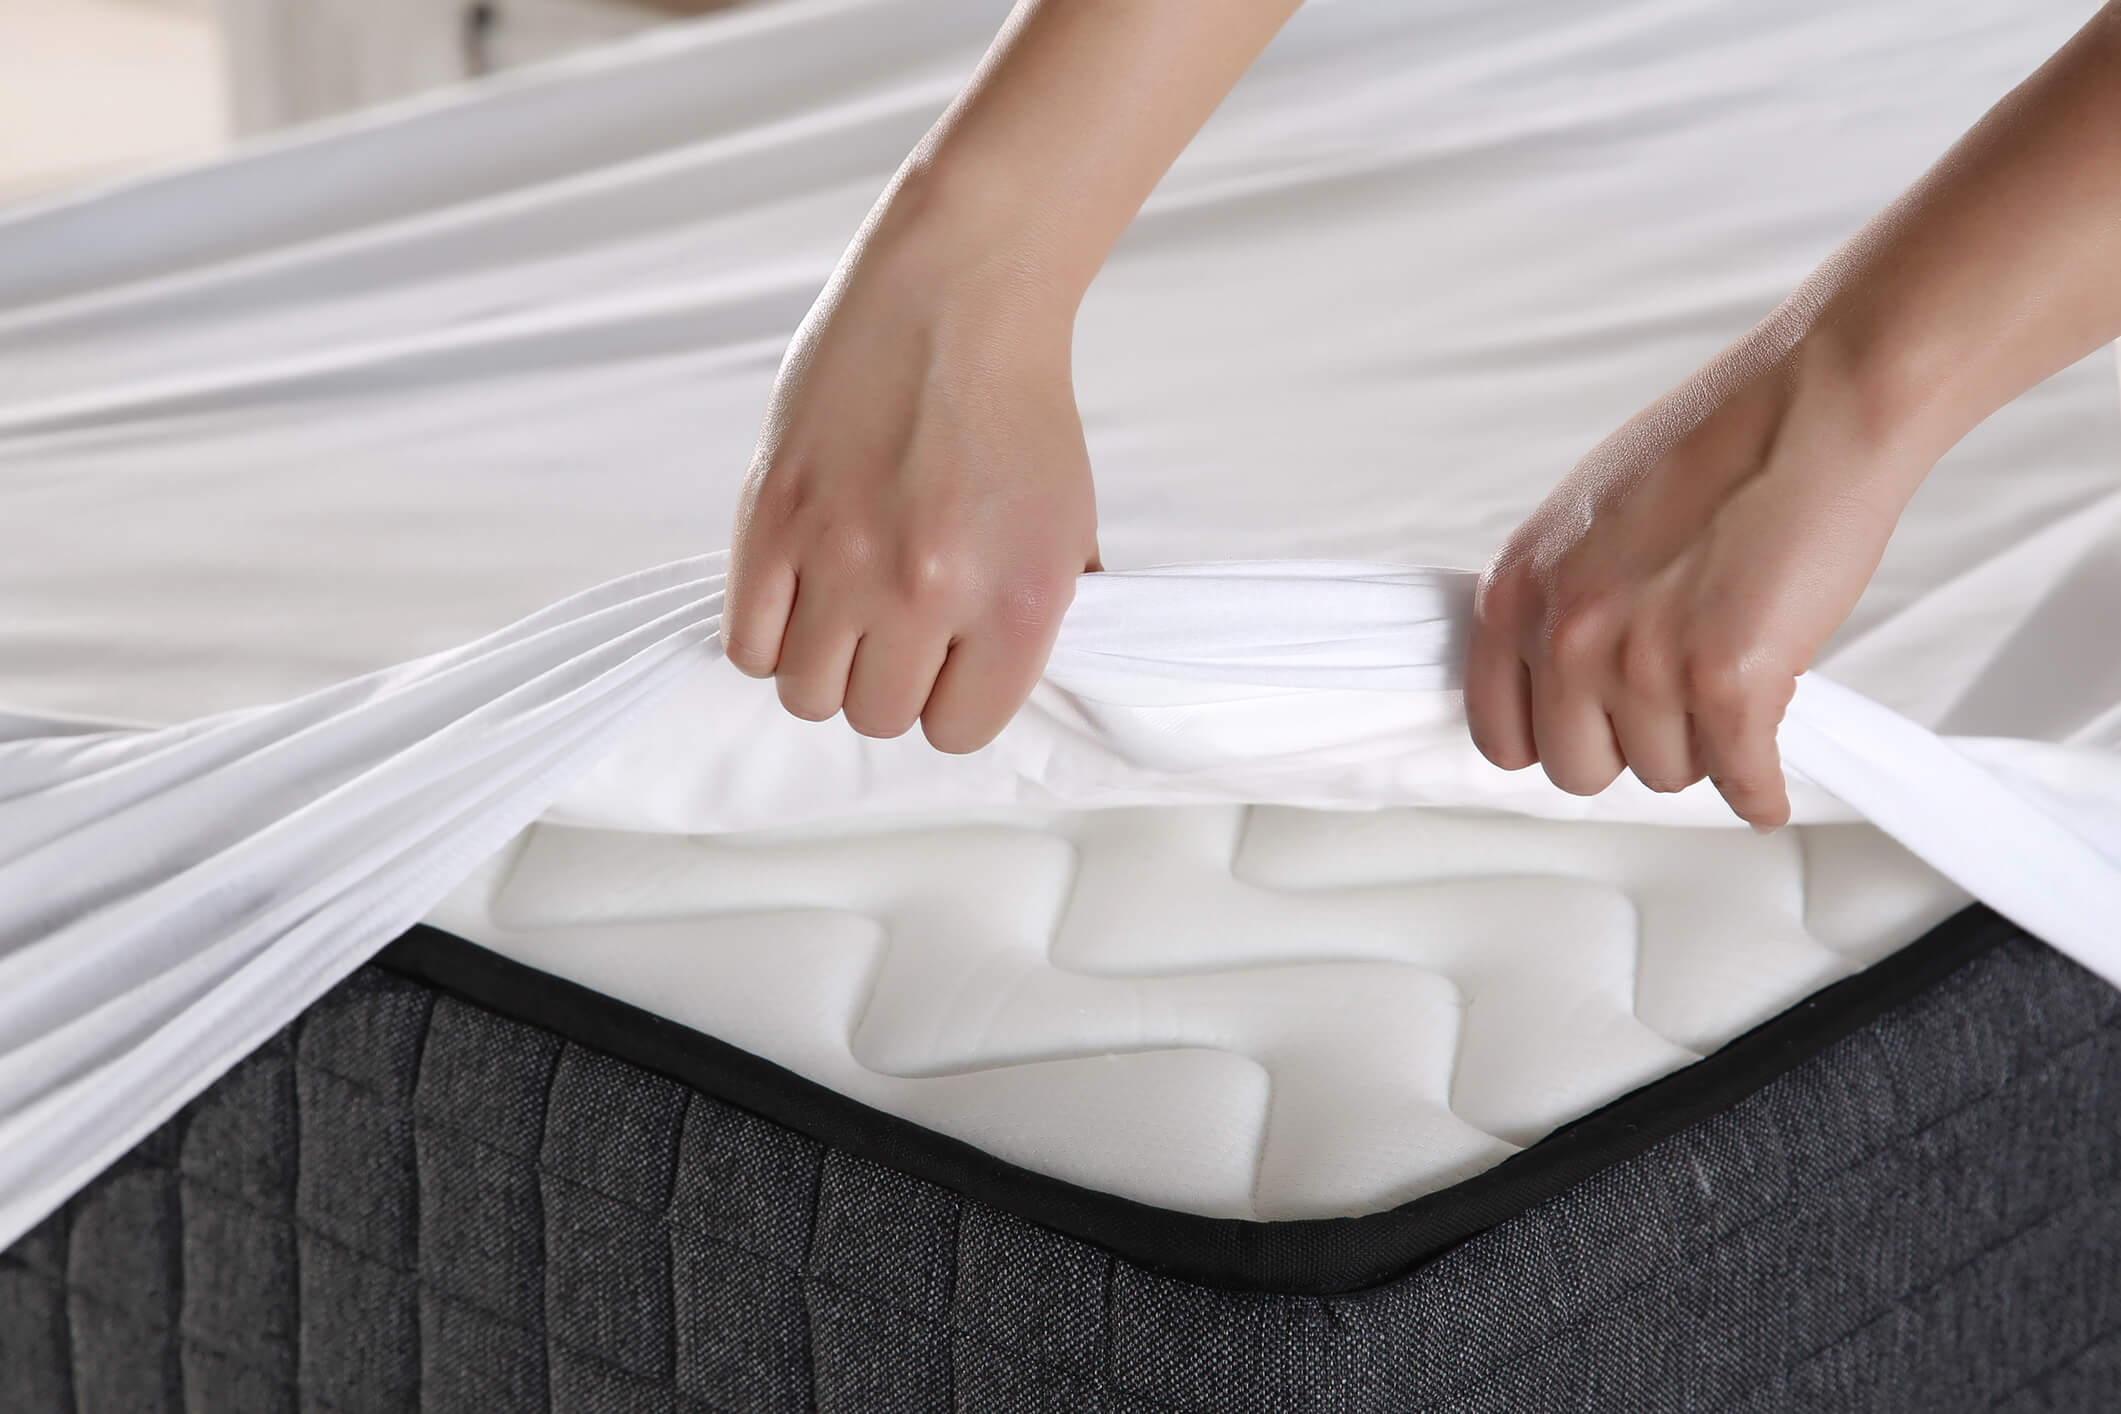 steamaid mattress cleaning service